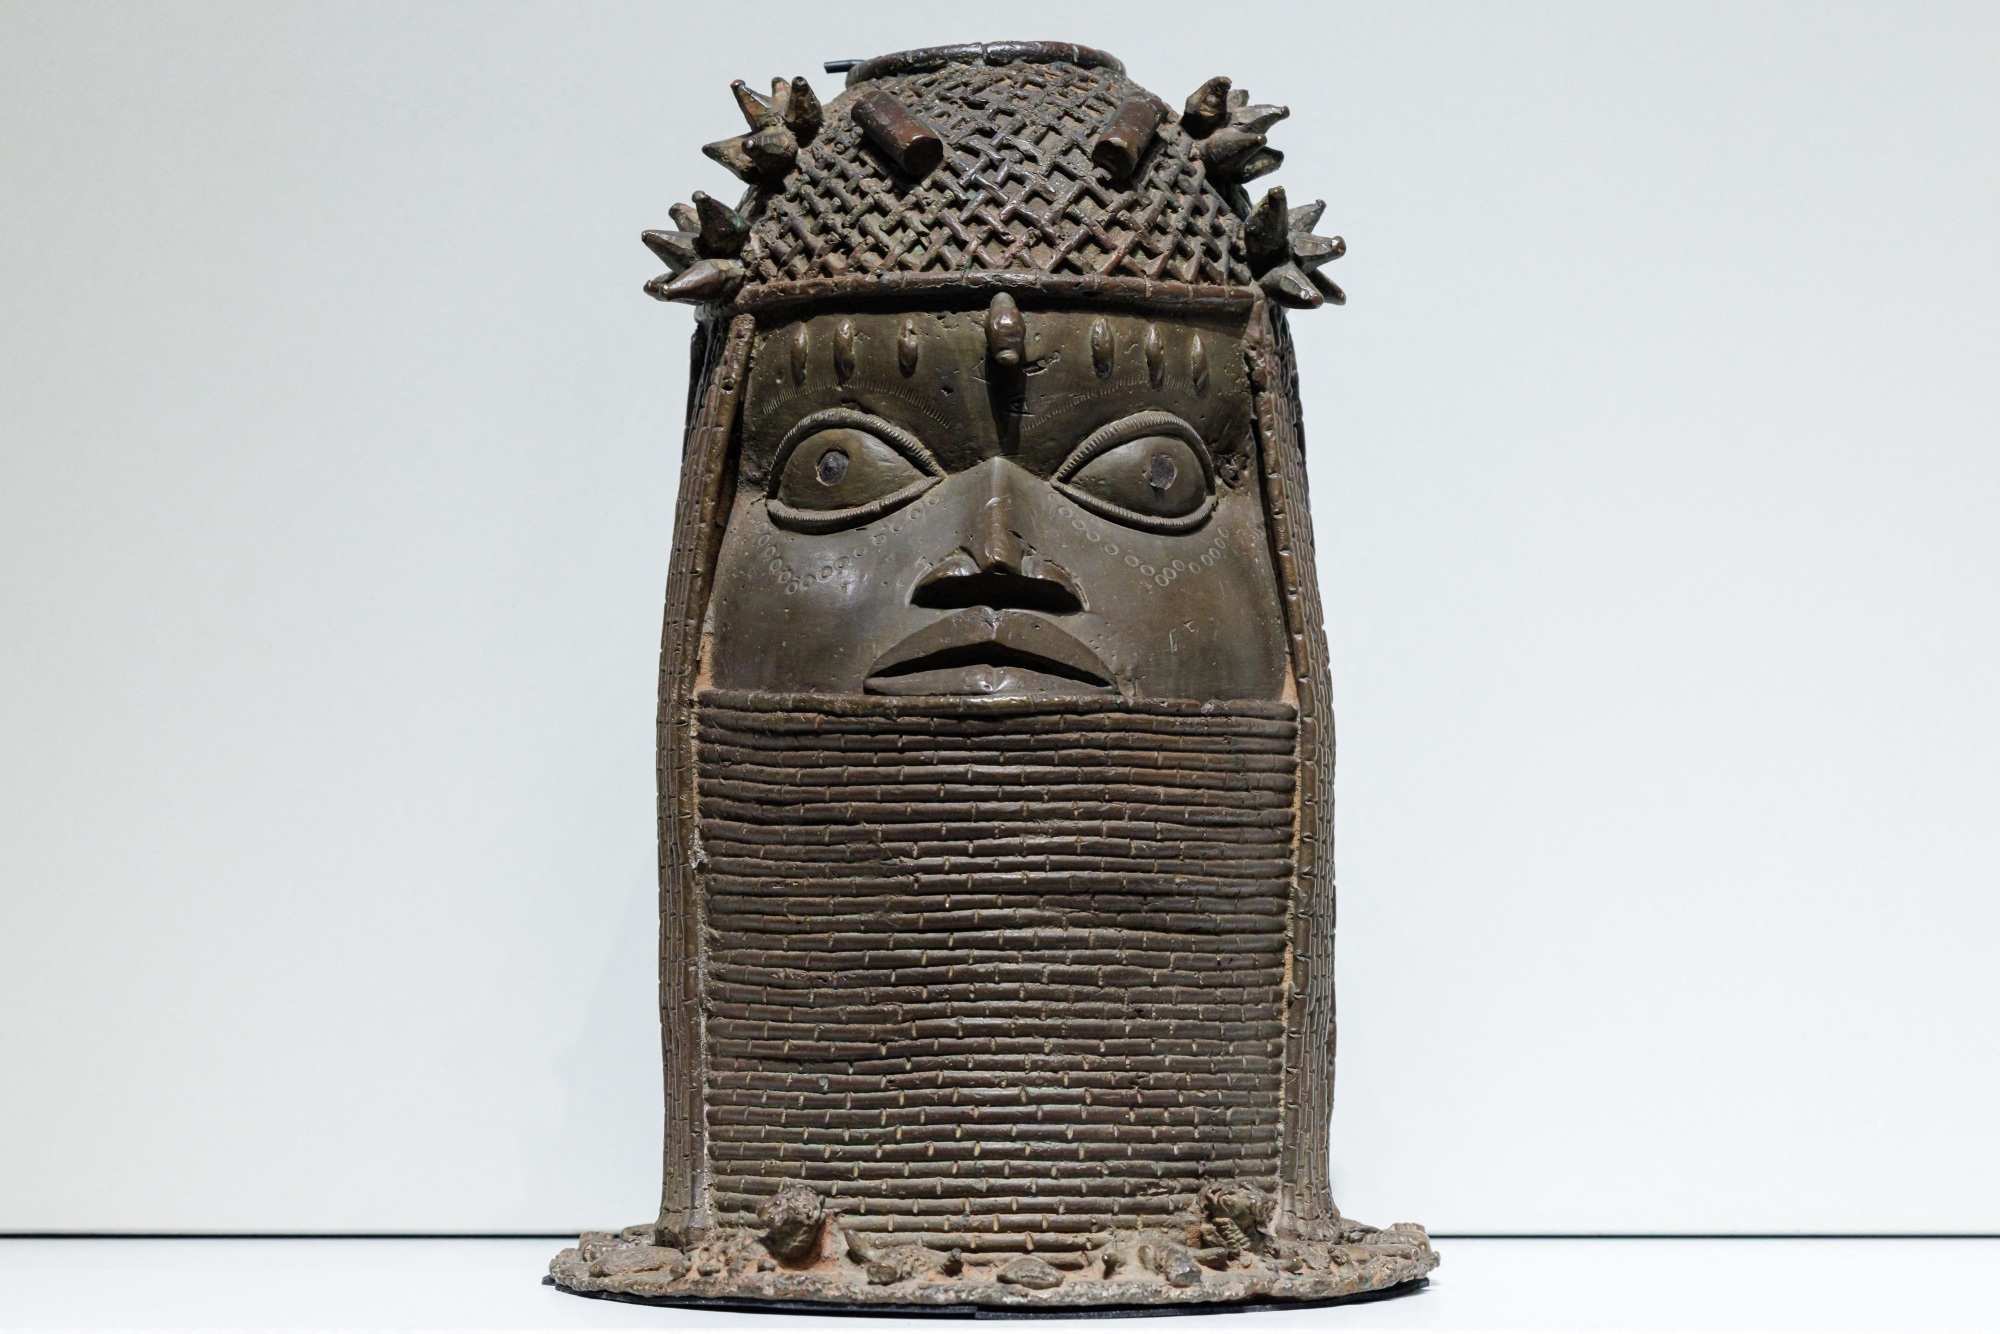 Returns Benin Bronzes Sculptures to Nigeria Looted British Colonists - Bloomberg